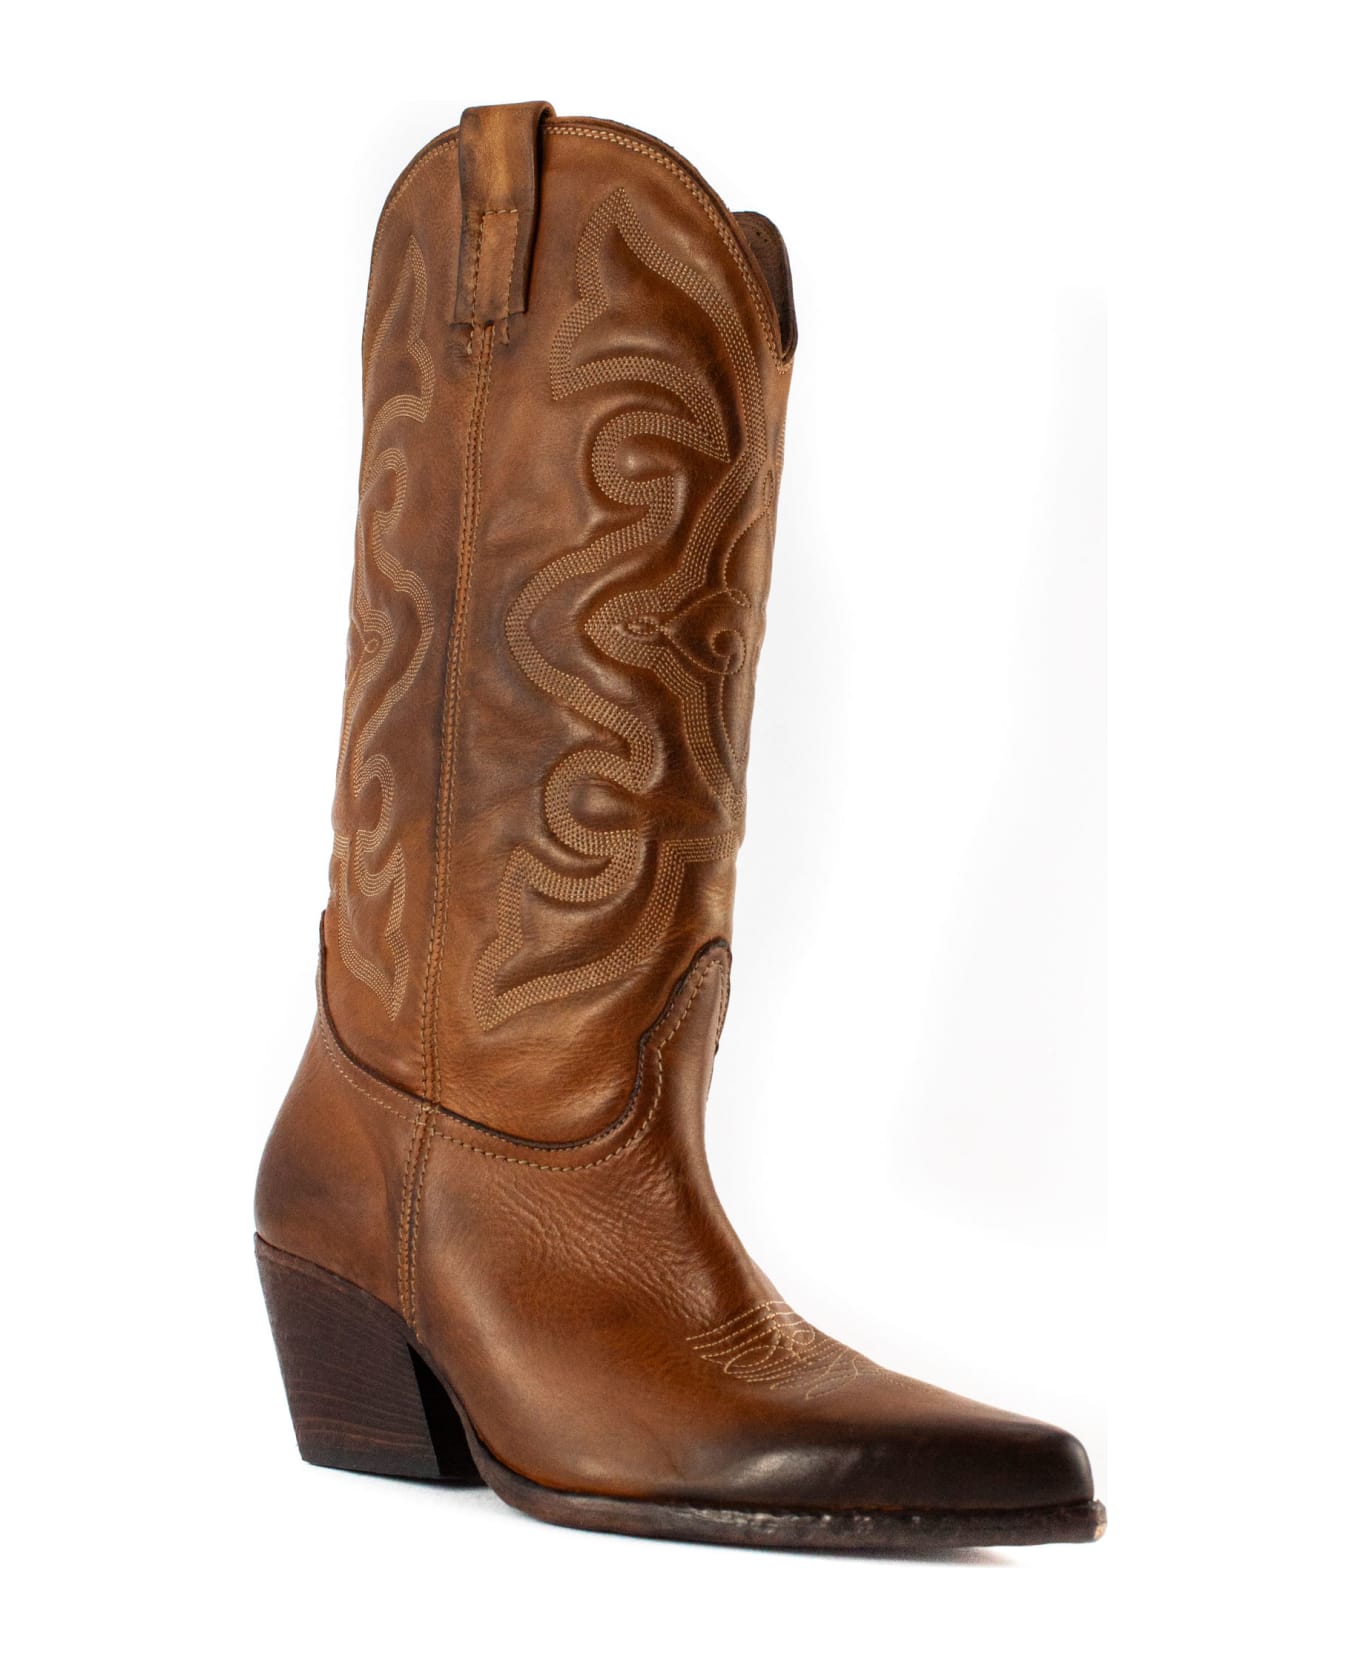 Elena Iachi Brown Leather Texan Boots - Brown ブーツ